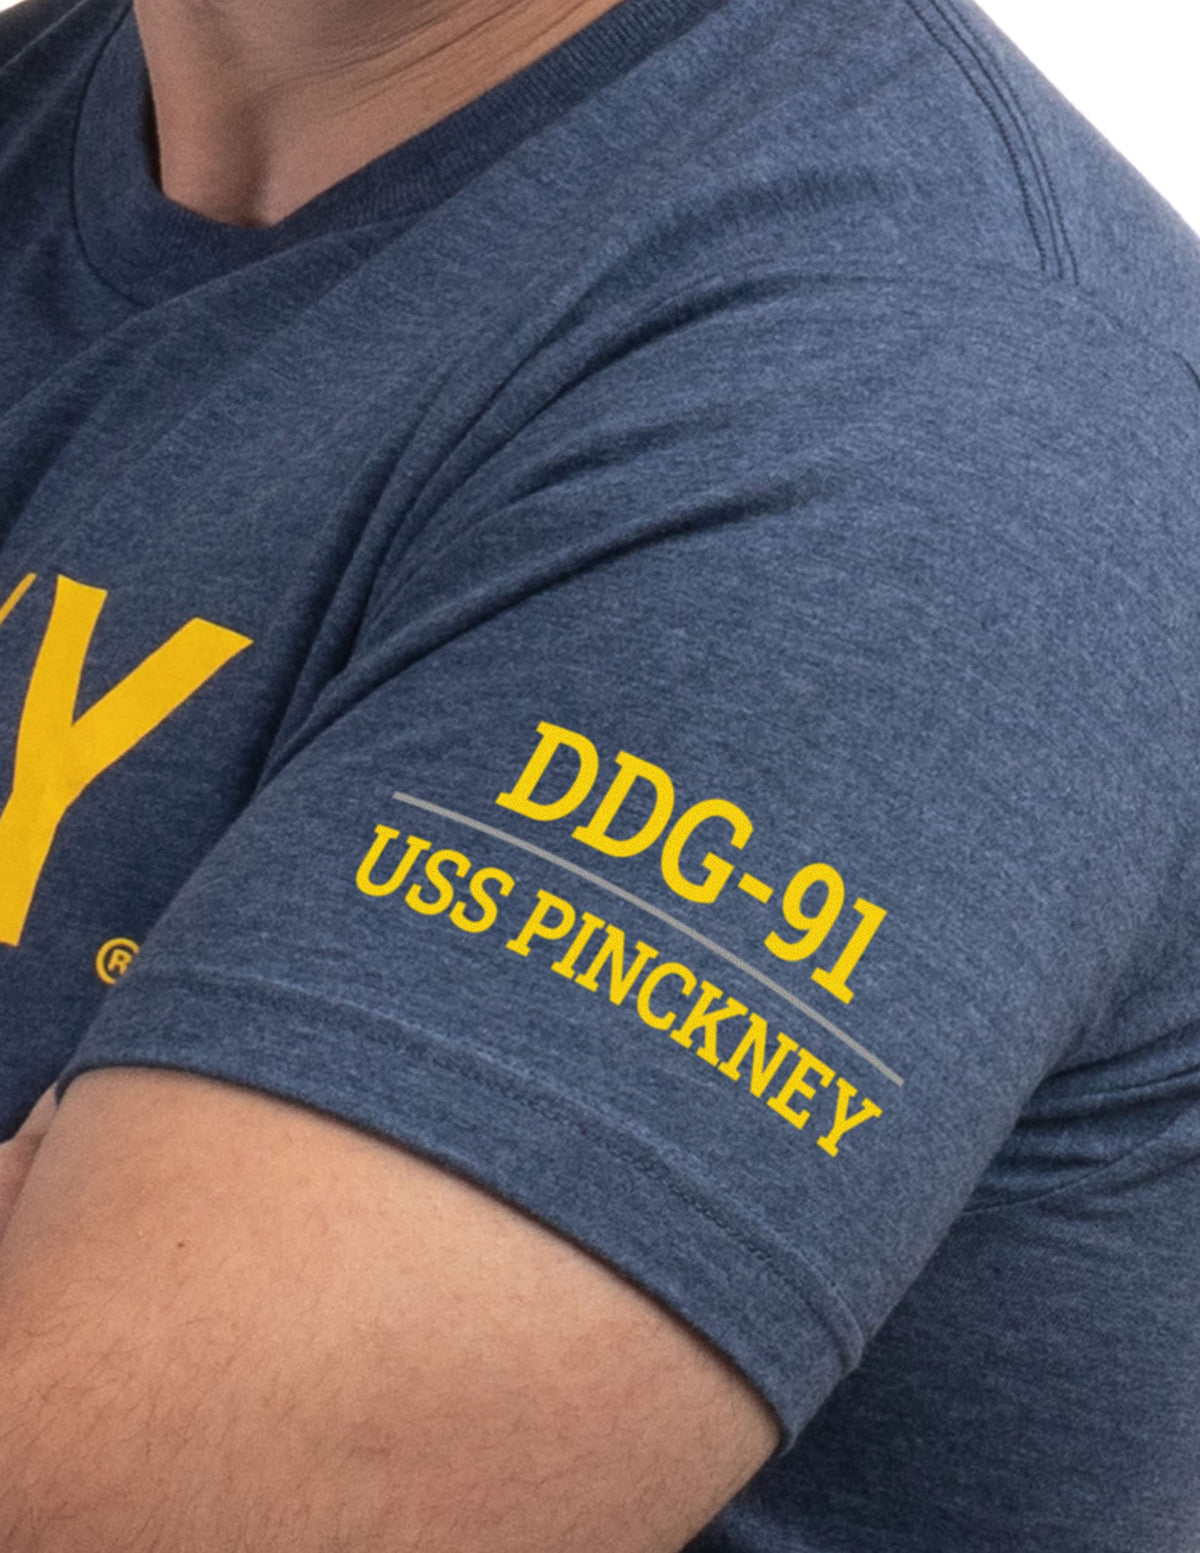 USS Pinckney, DDG-91 | U.S. Navy Sailor Veteran USN United States Naval T-shirt for Men Women